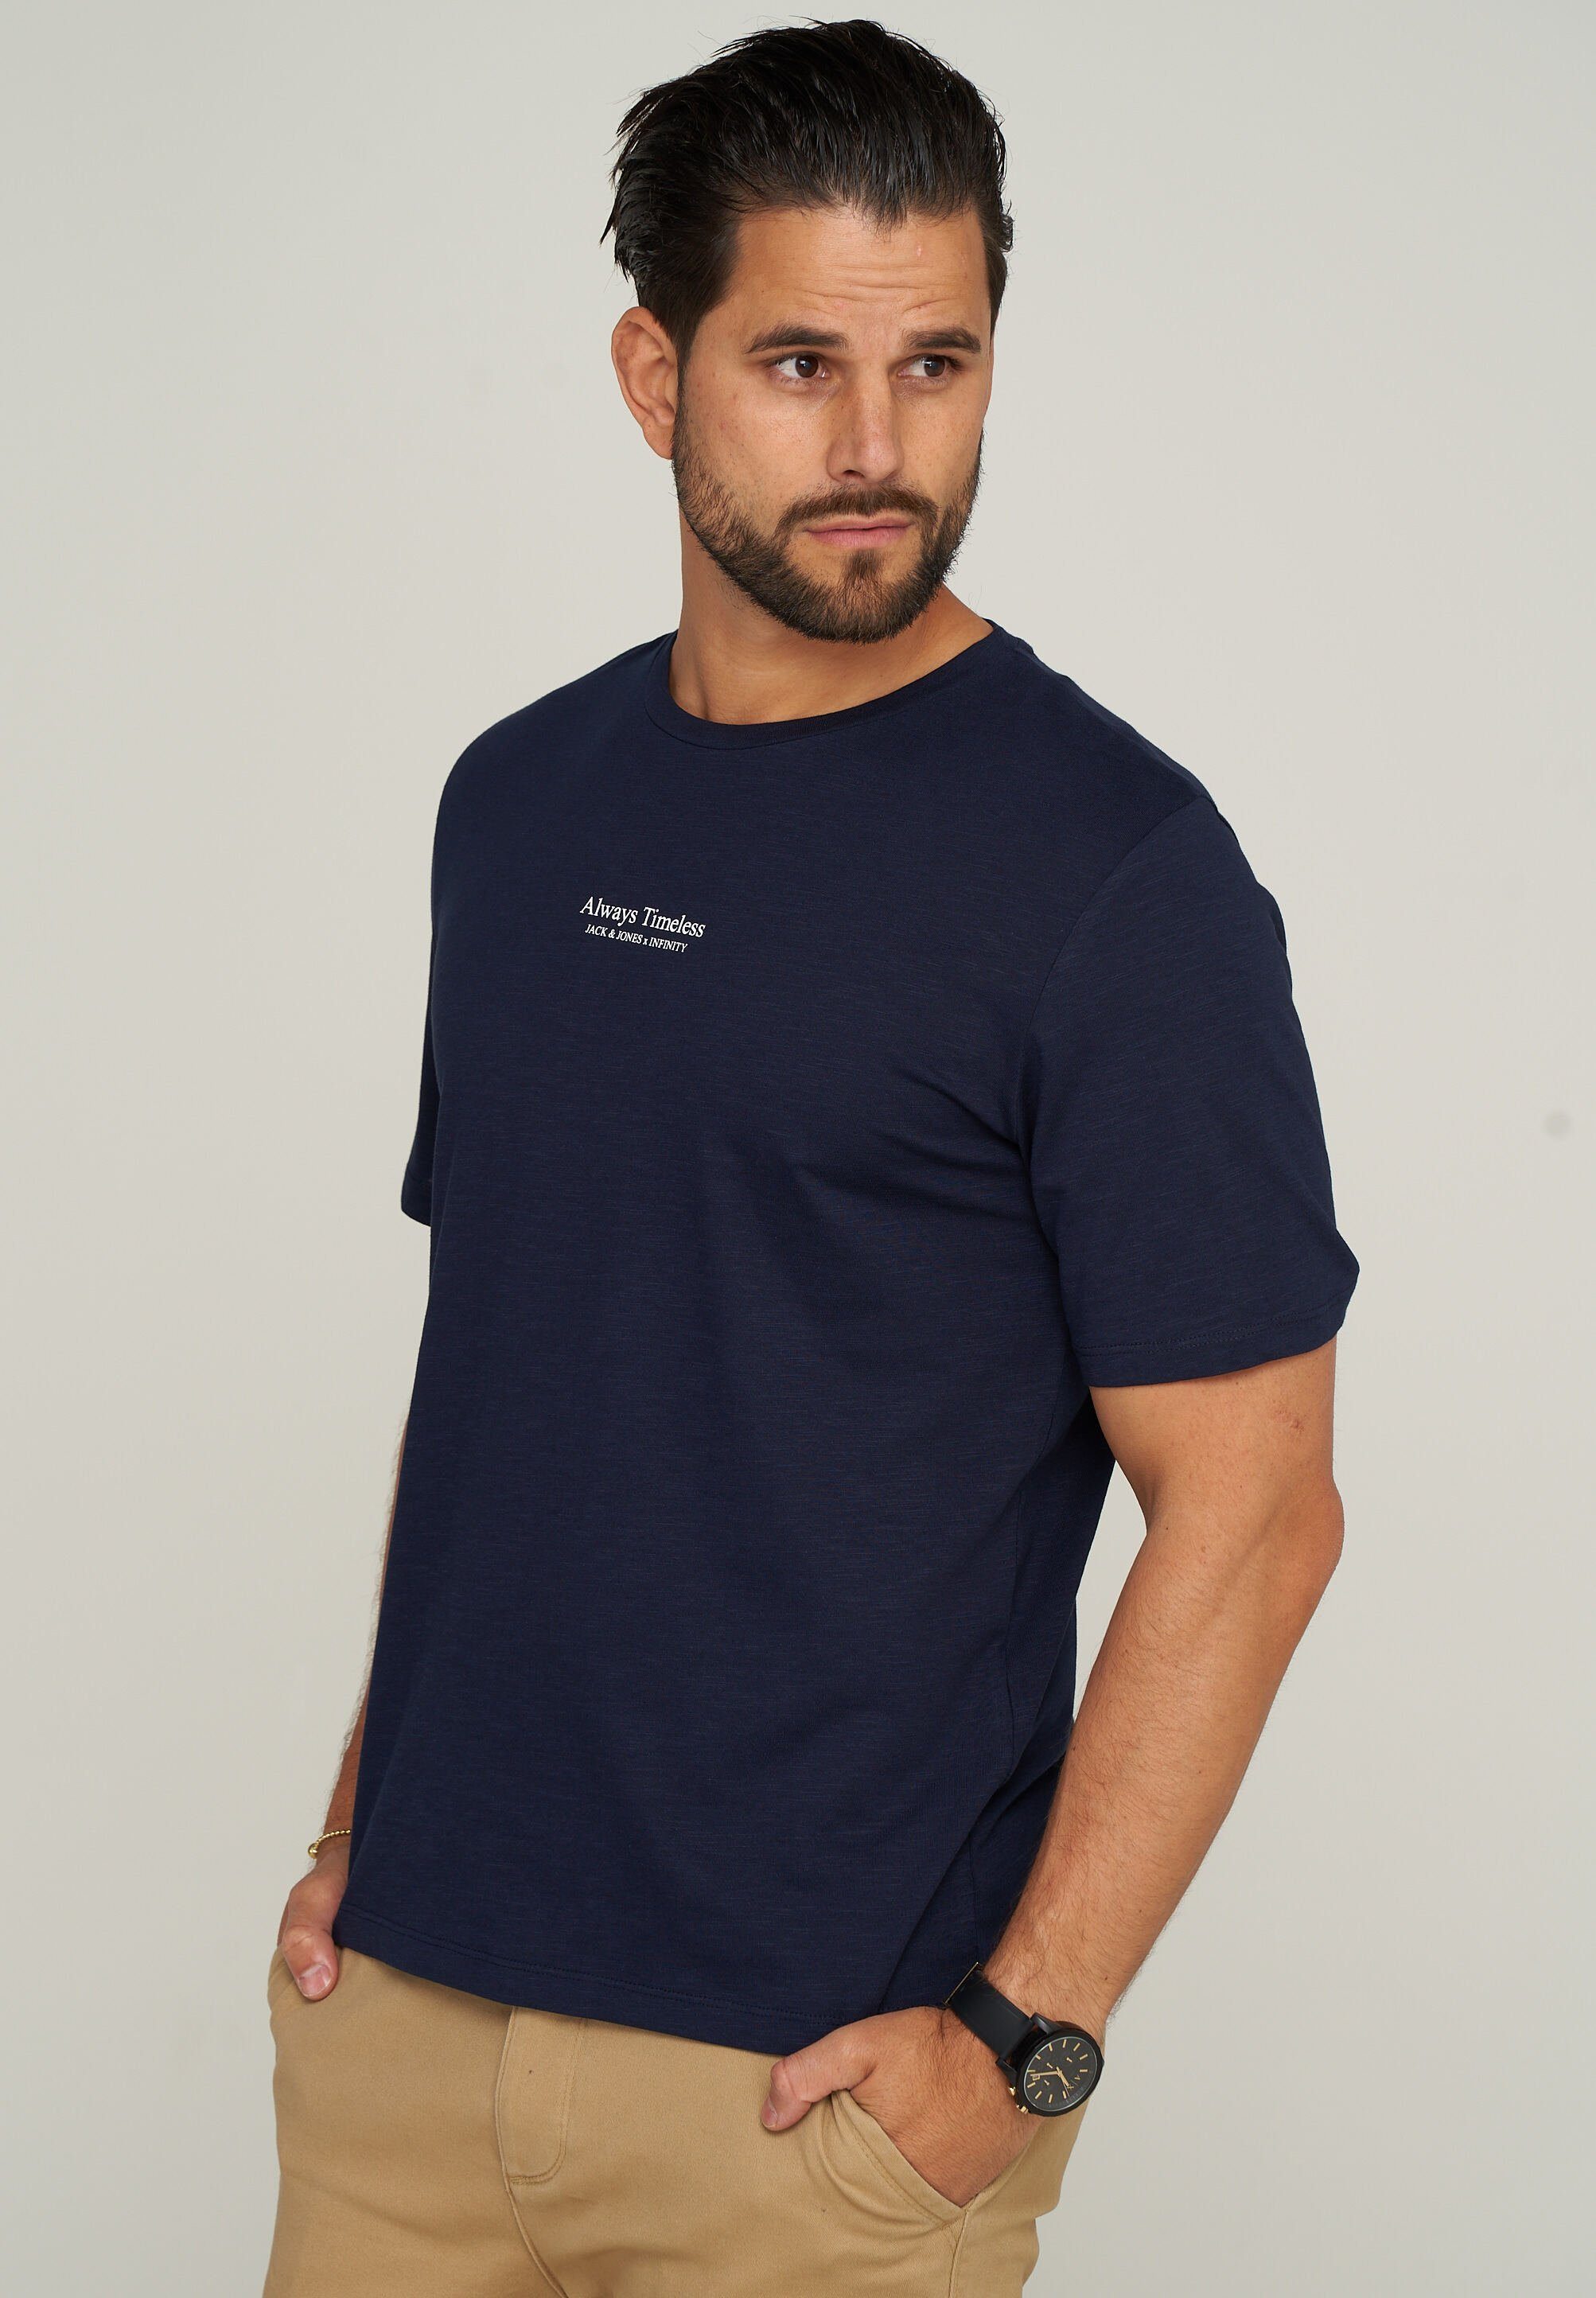 Blazer Navy & CREW INFINITY JPRMARC NECK SS Jones T-Shirt TEE Jack